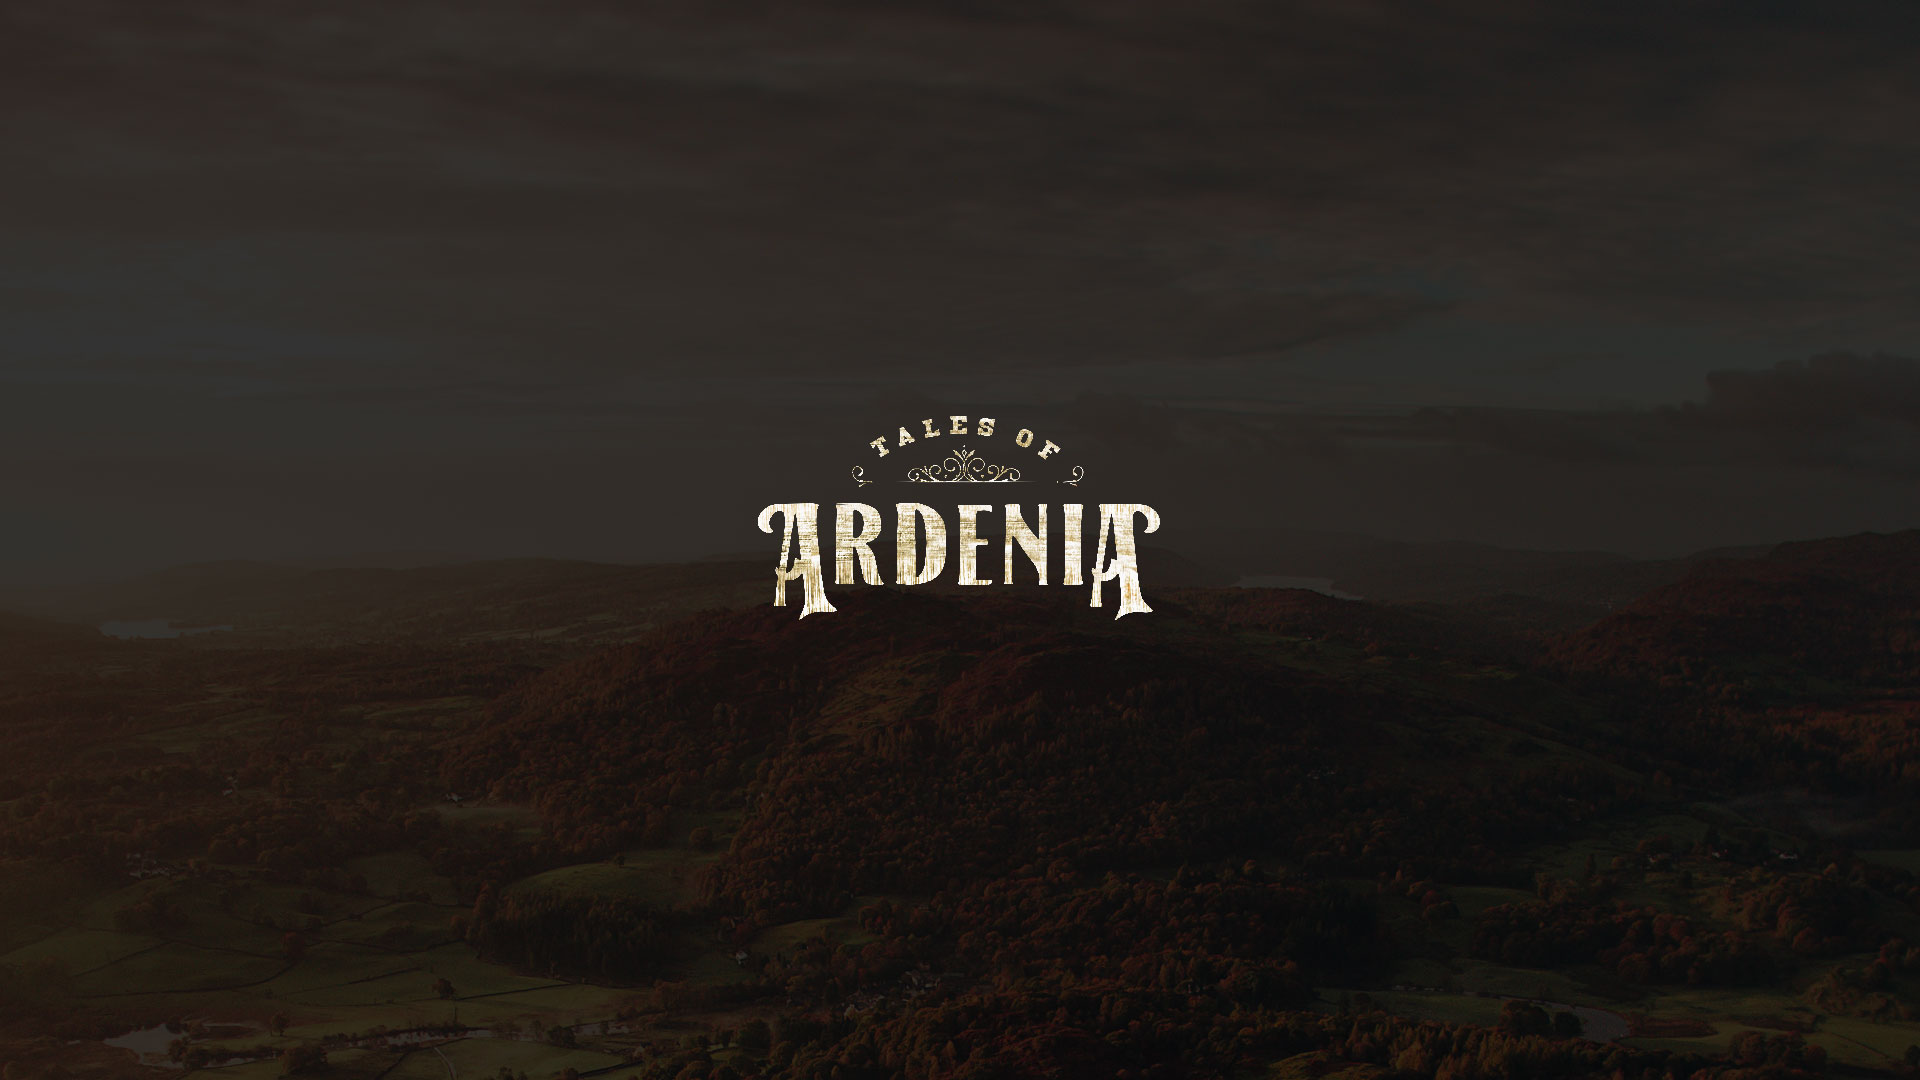 Tales of Ardenia